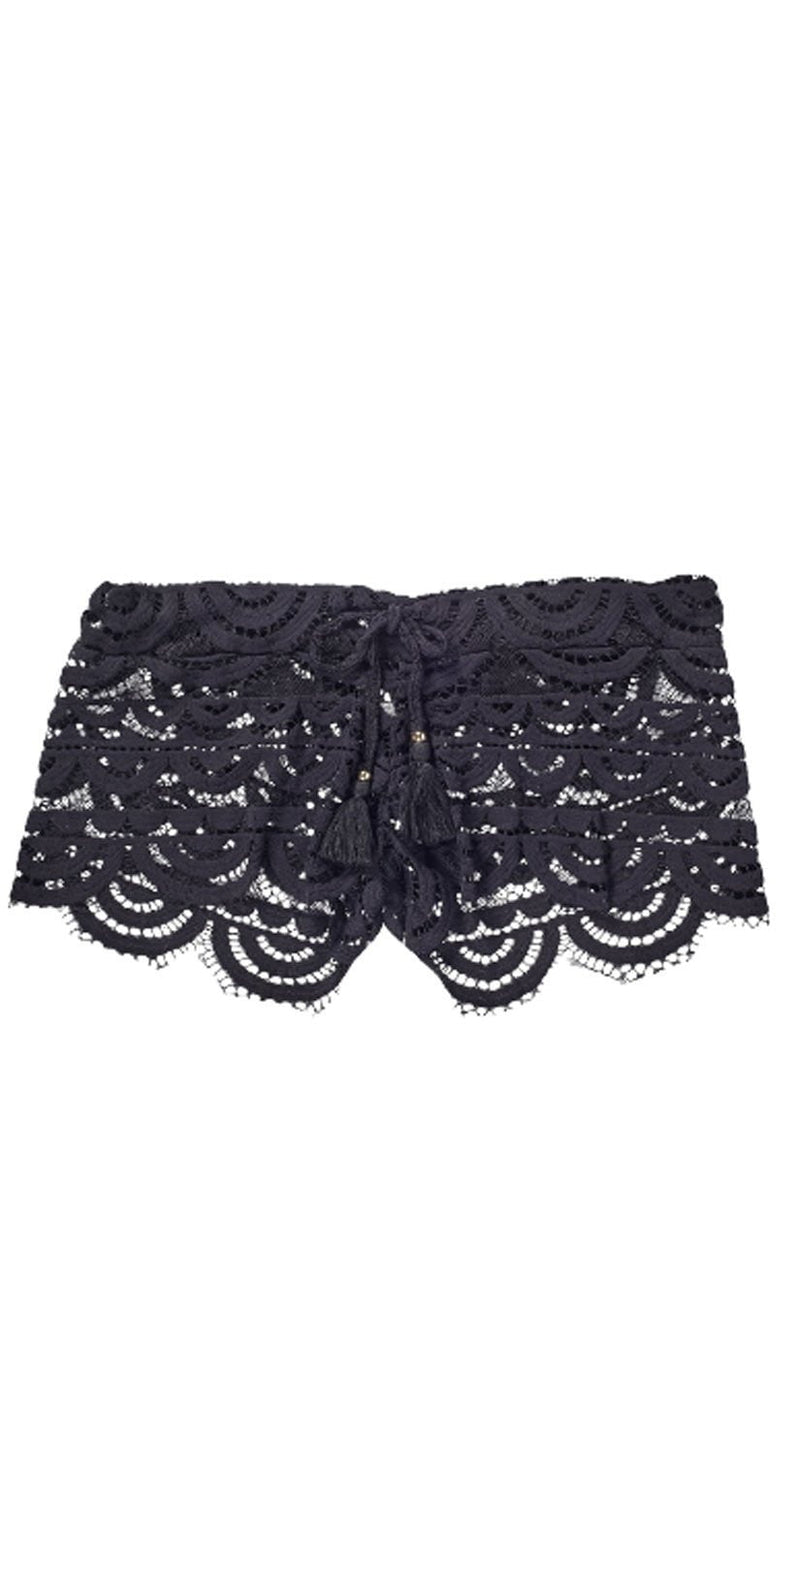 PilyQ Lace Diva Lexi Shorts in Black LCD-442S: